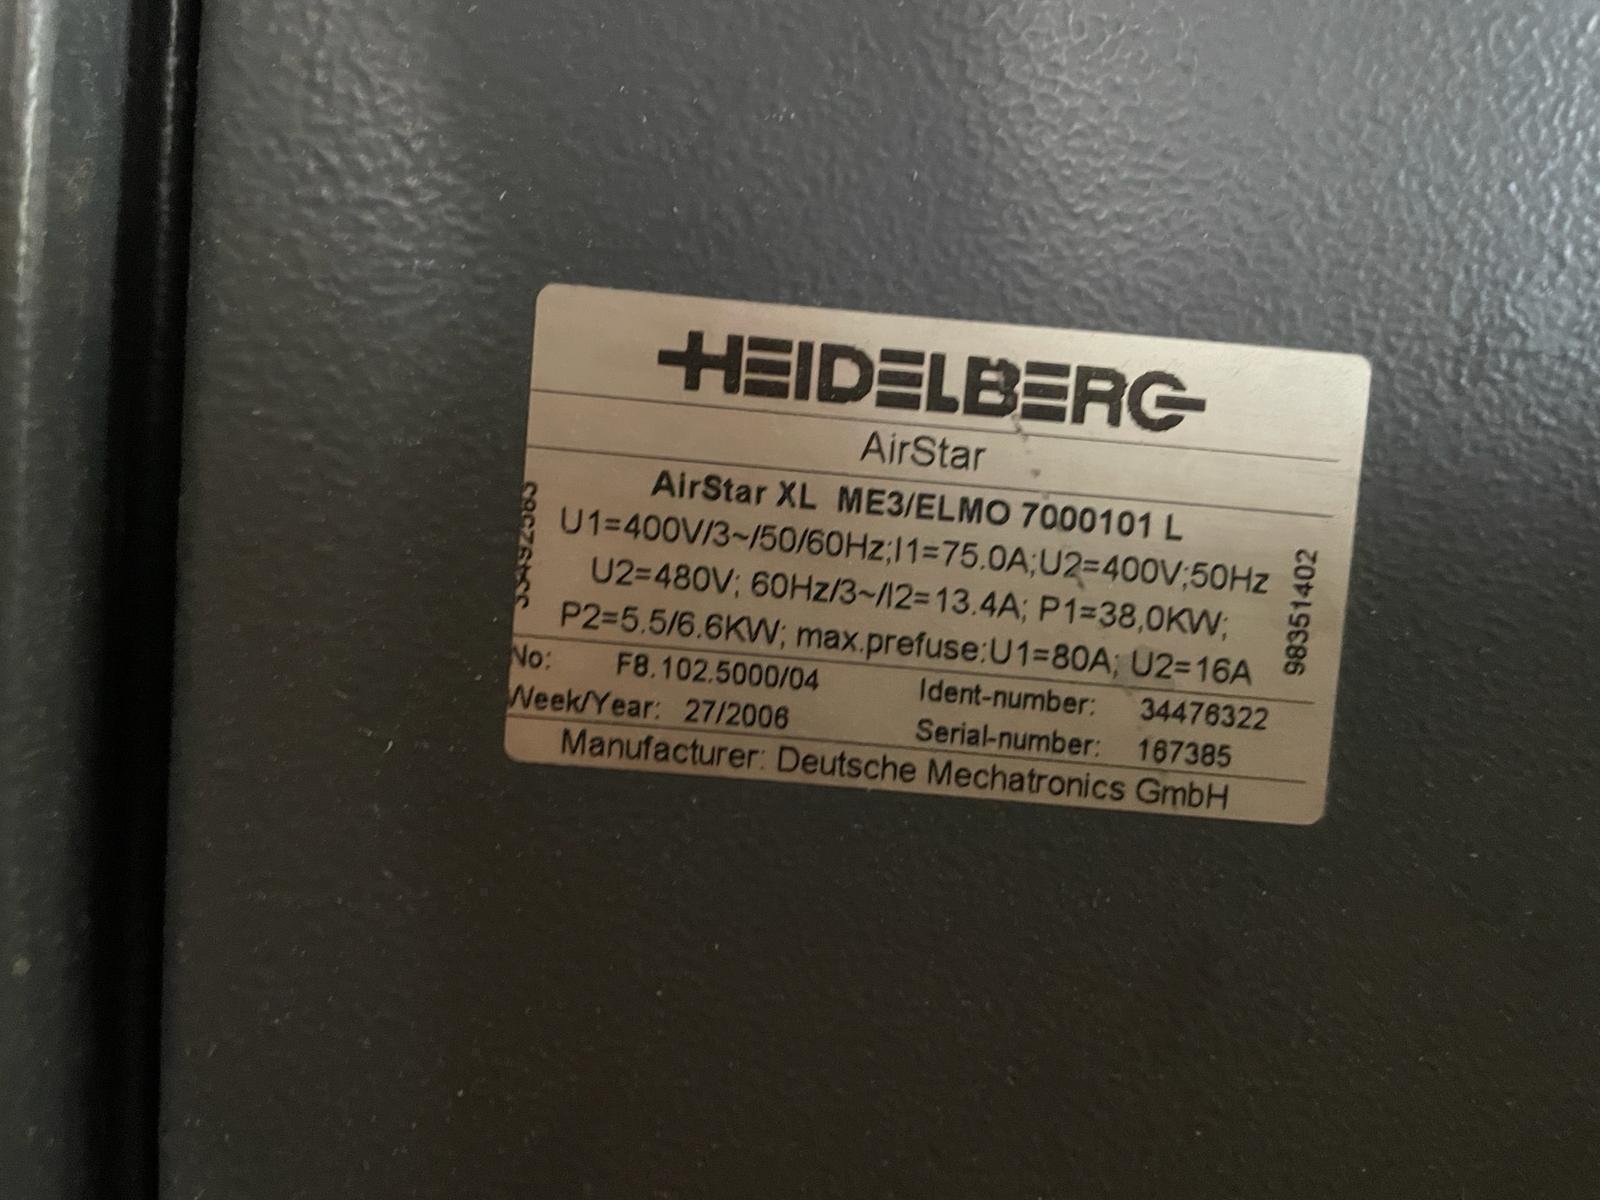 Offer 373018, a HEIDELBERG XL 105-5 from 2006